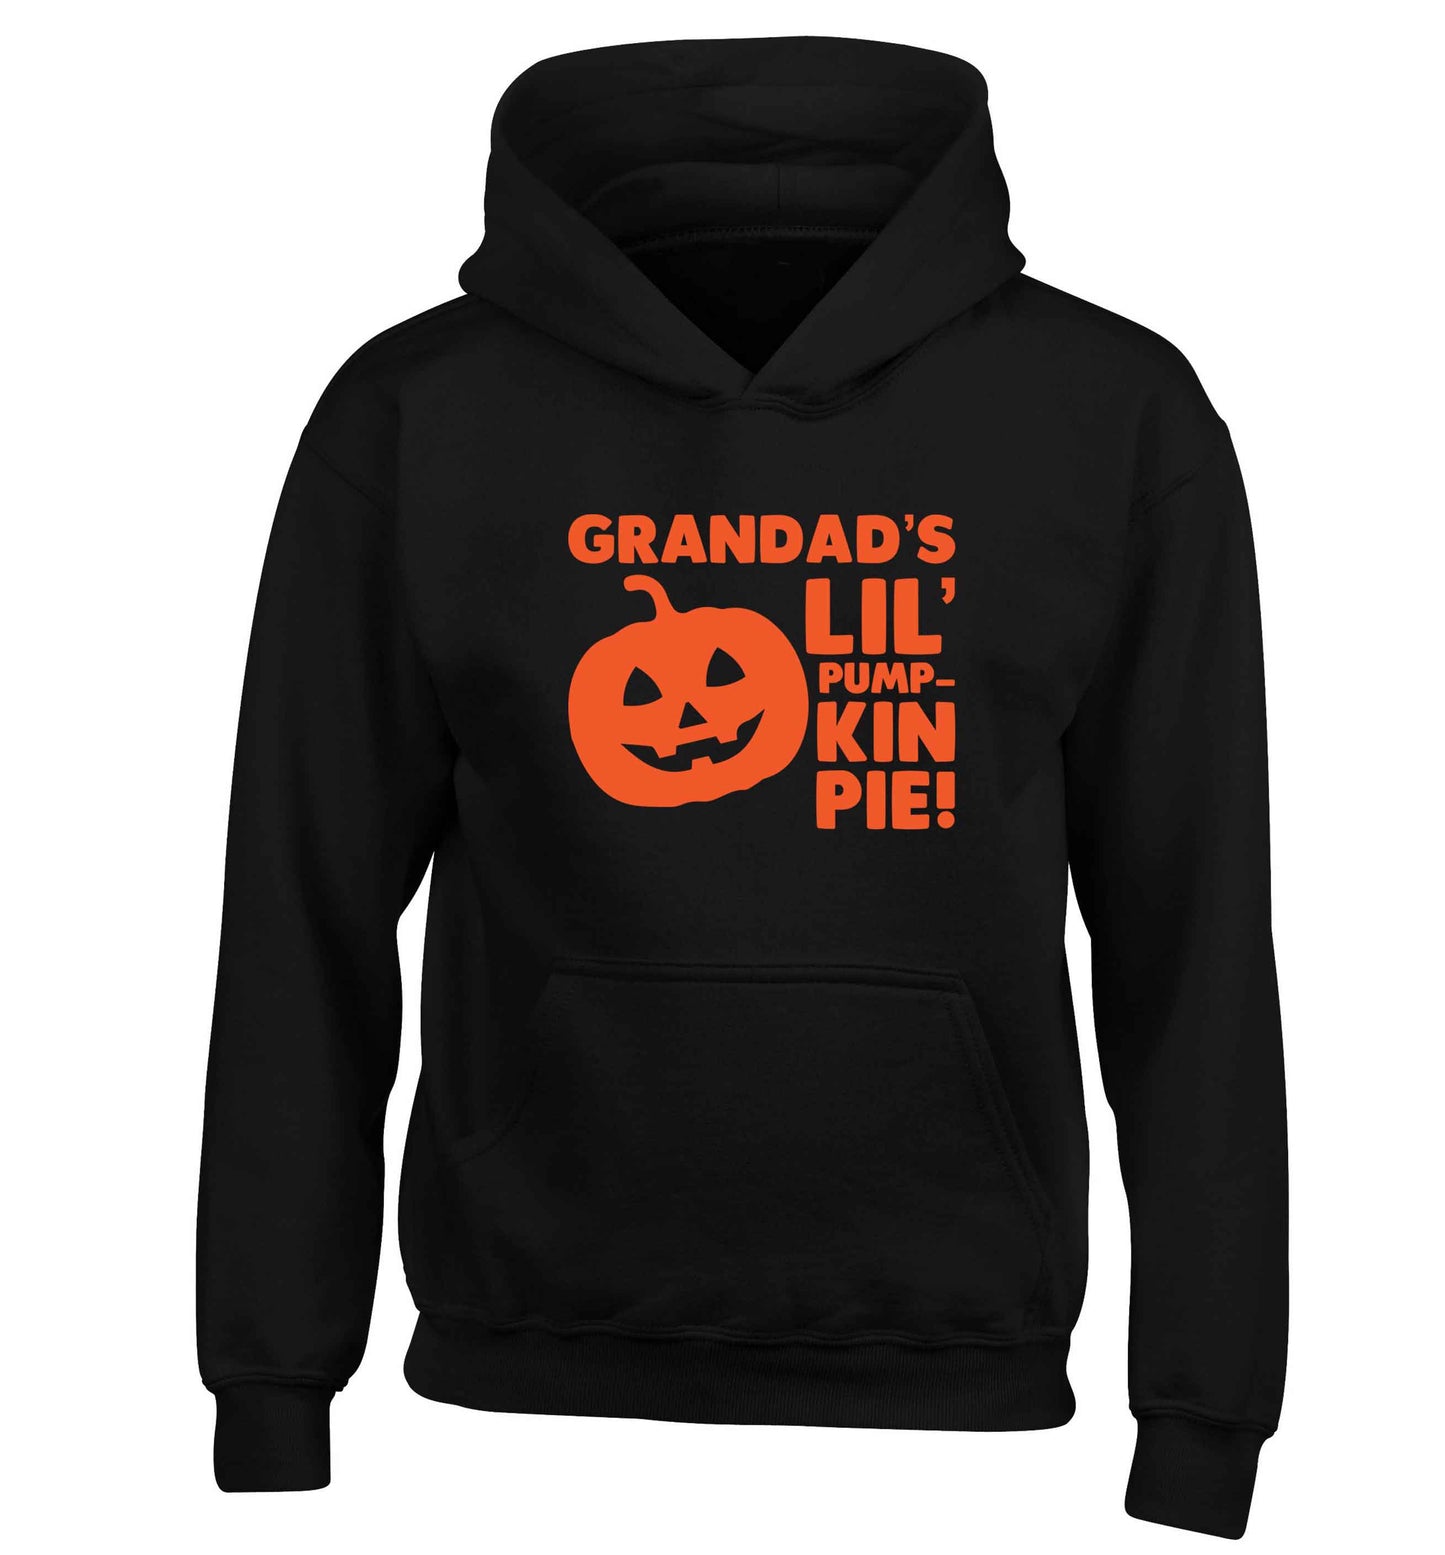 Grandad's lil' pumpkin pie children's black hoodie 12-13 Years